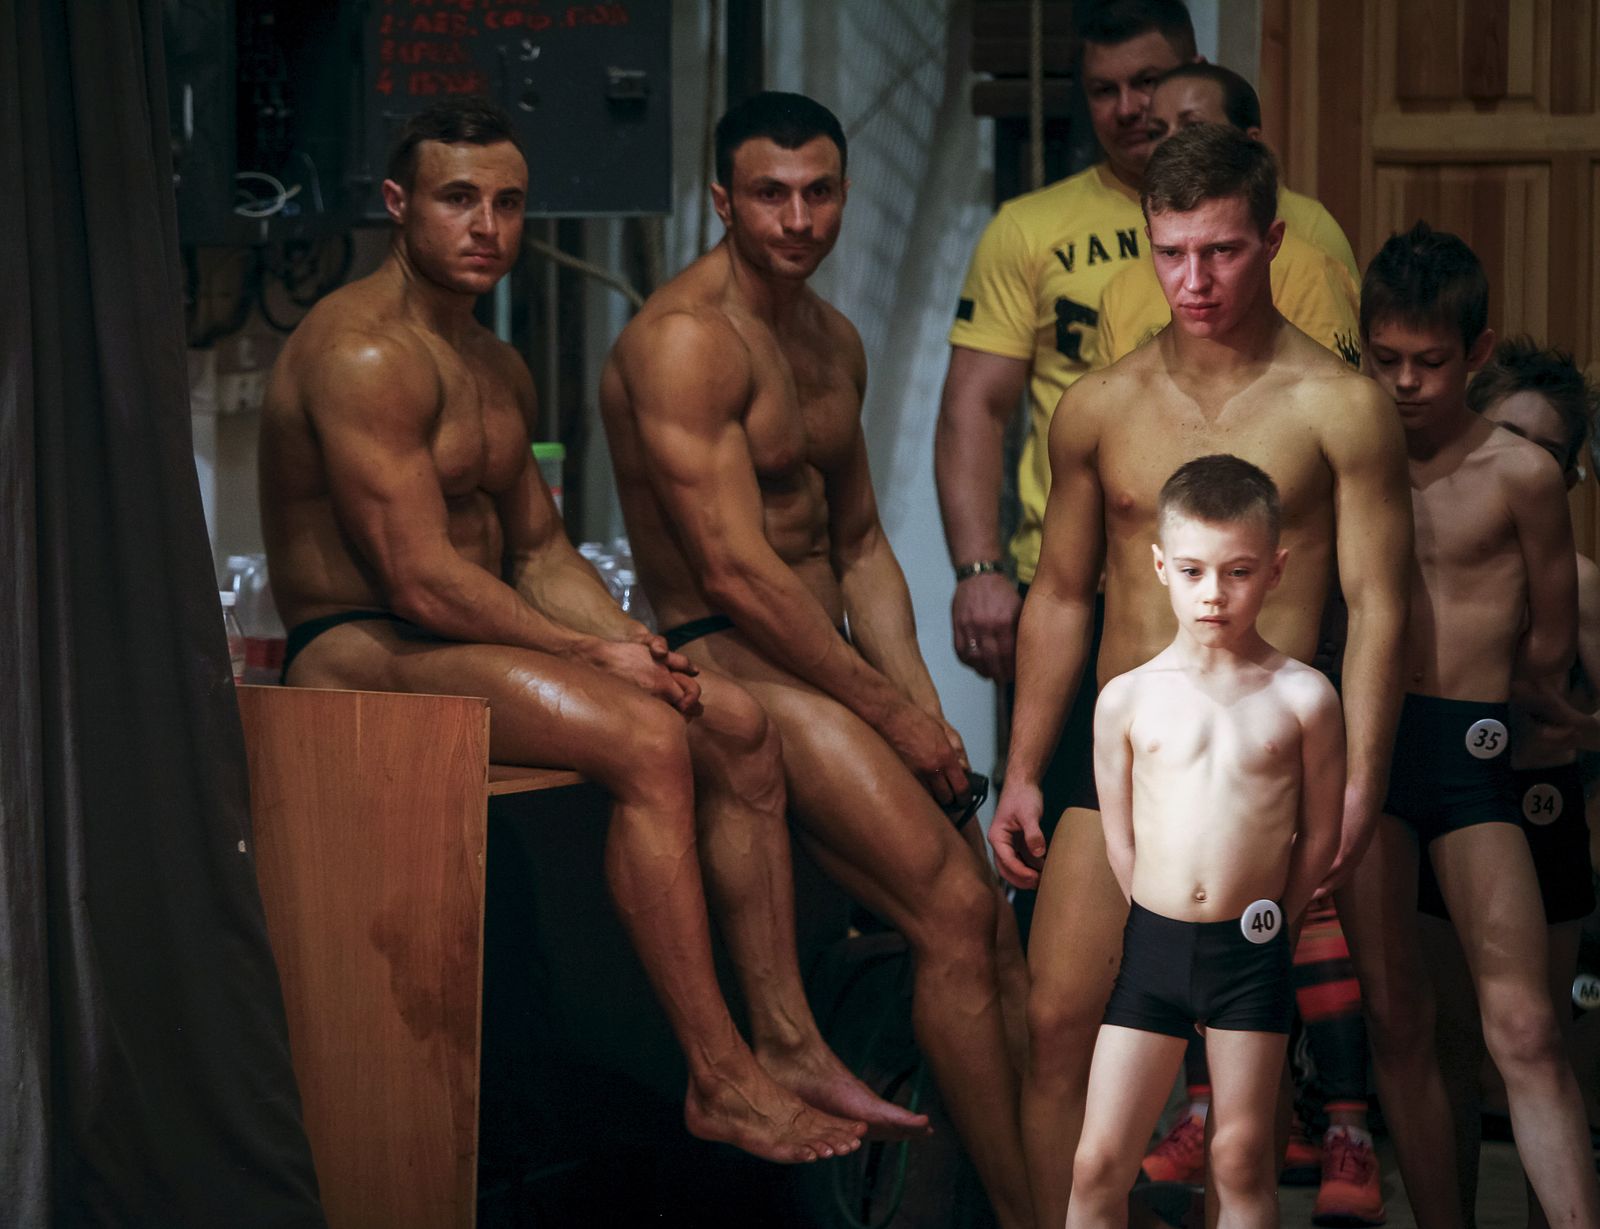 © EDUARD KORNIYENKO - Participants wait backstage during a regional bodybuilding championship in Stavropol, southern Russia, April 10, 2016.